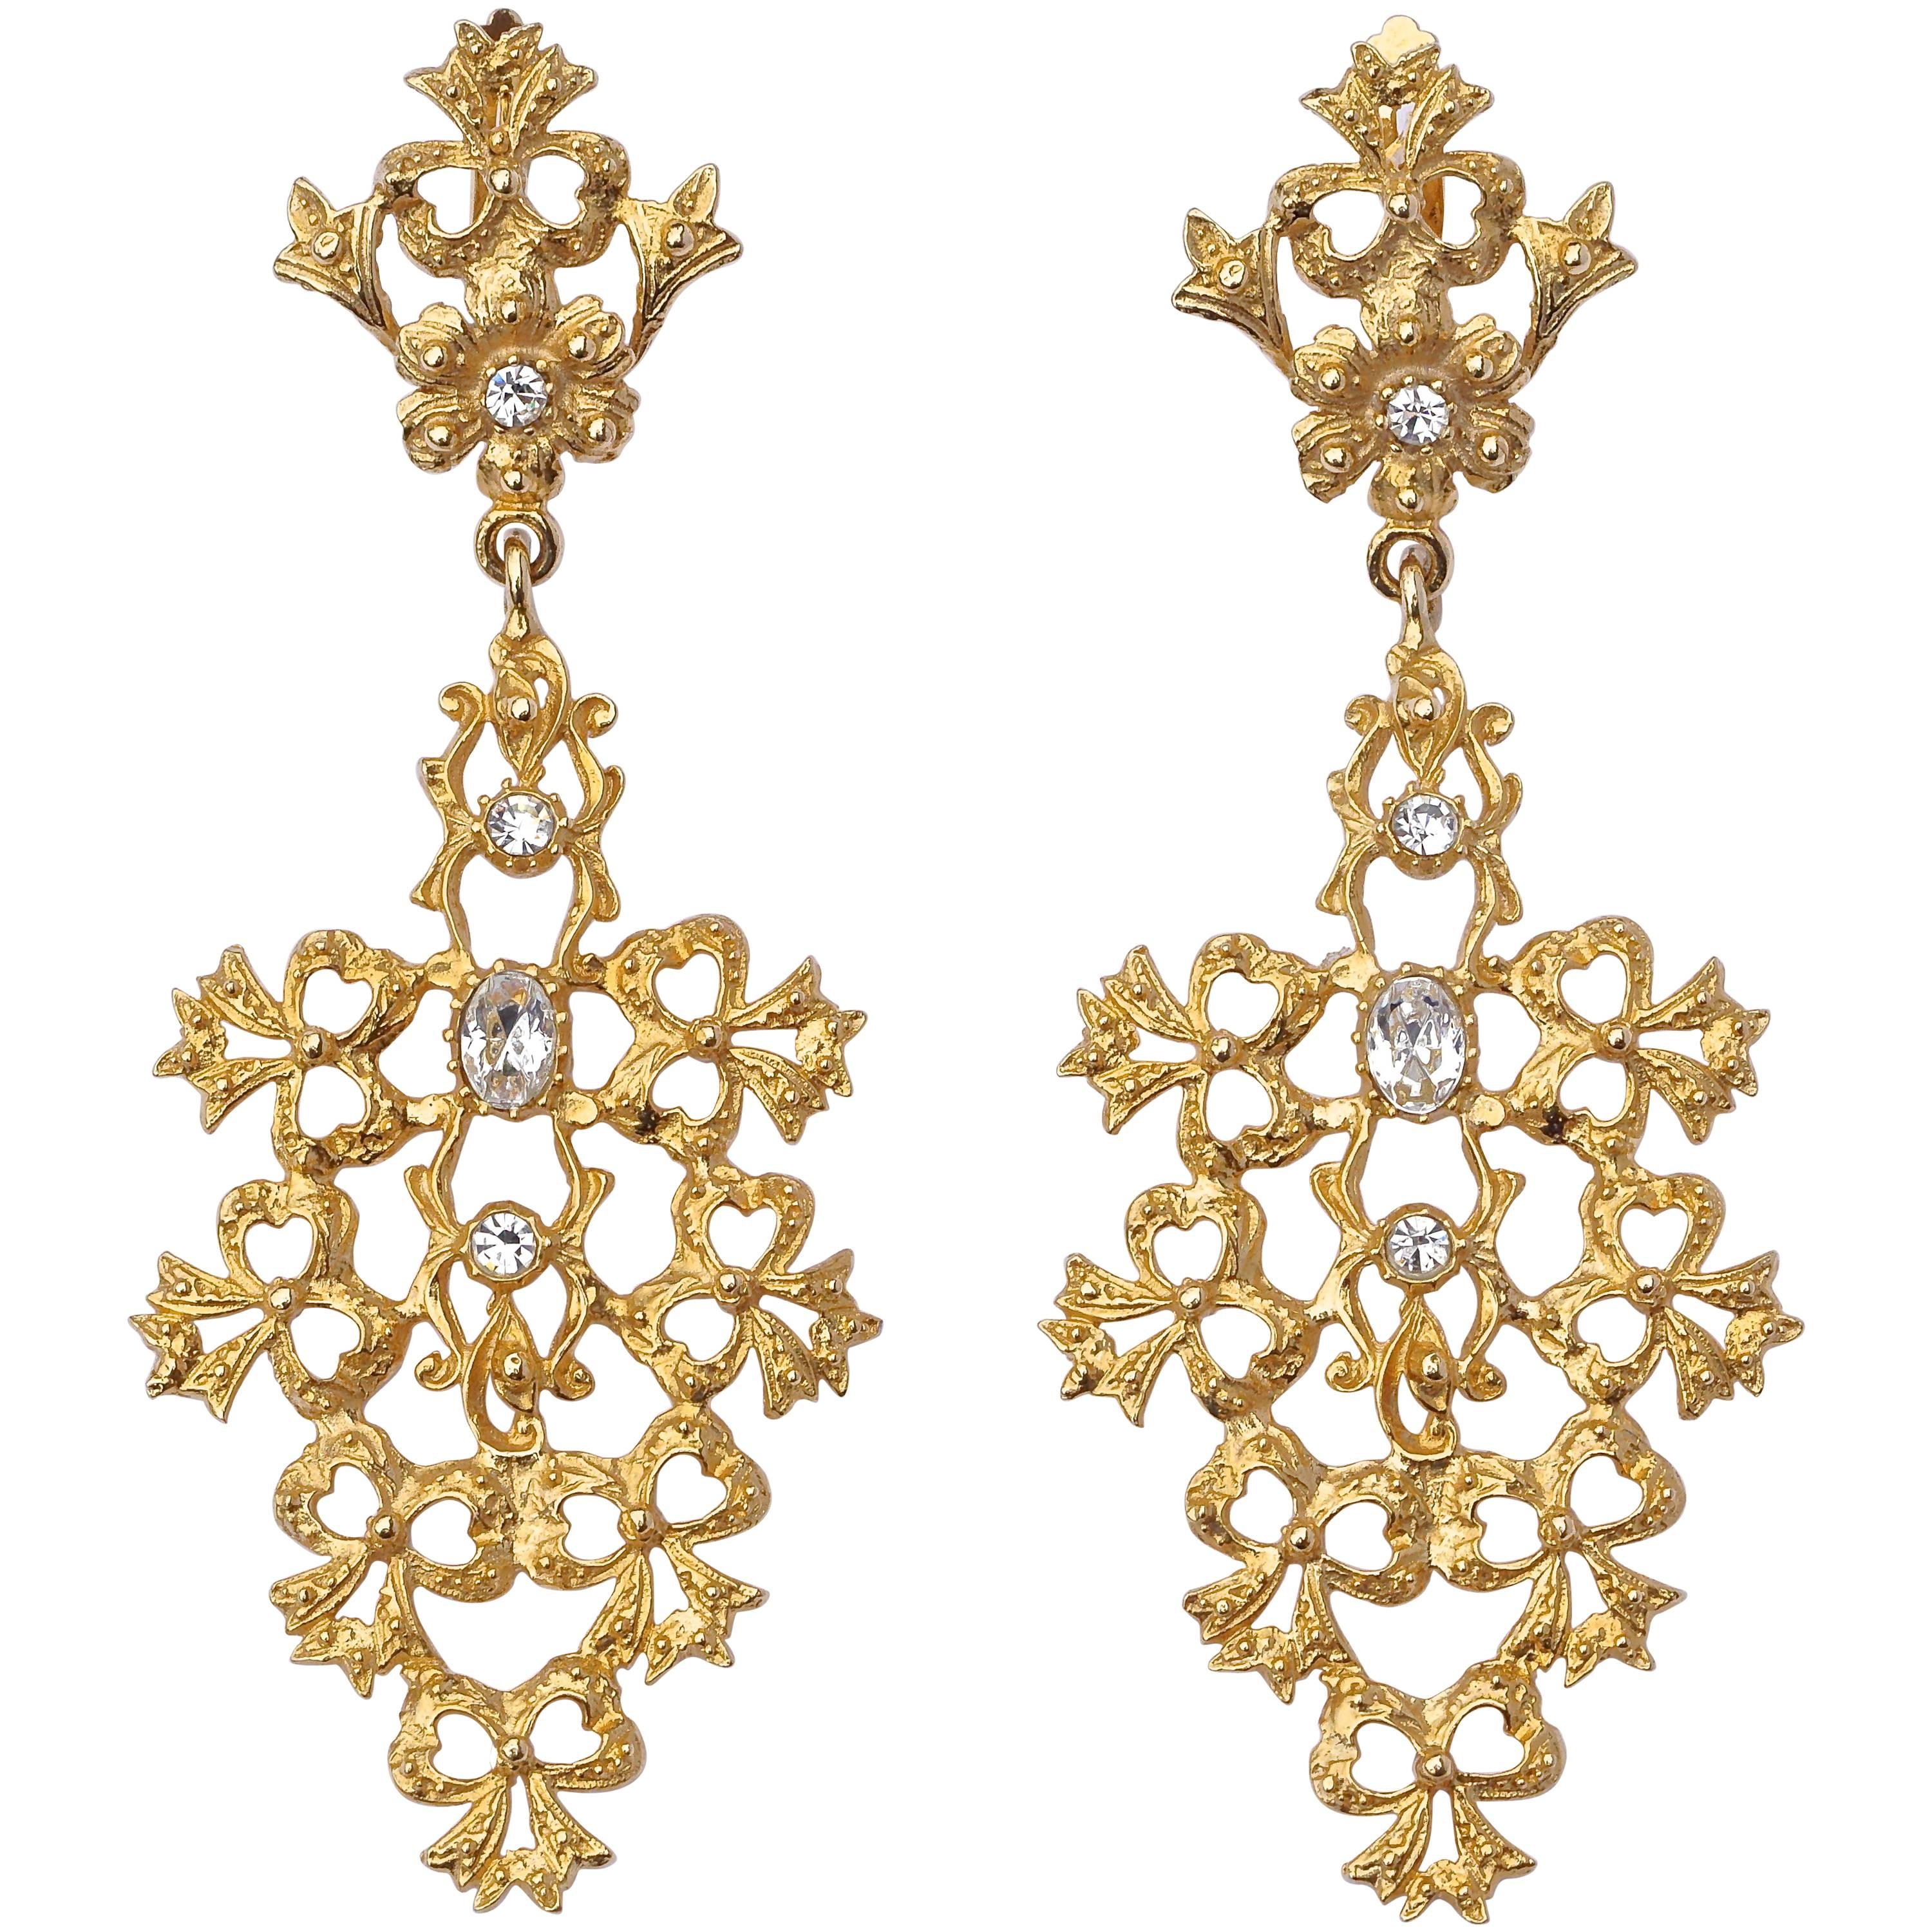 Gold Tone Clear Rhinestones Flower Bows Chandelier Vintage Statement Earrings